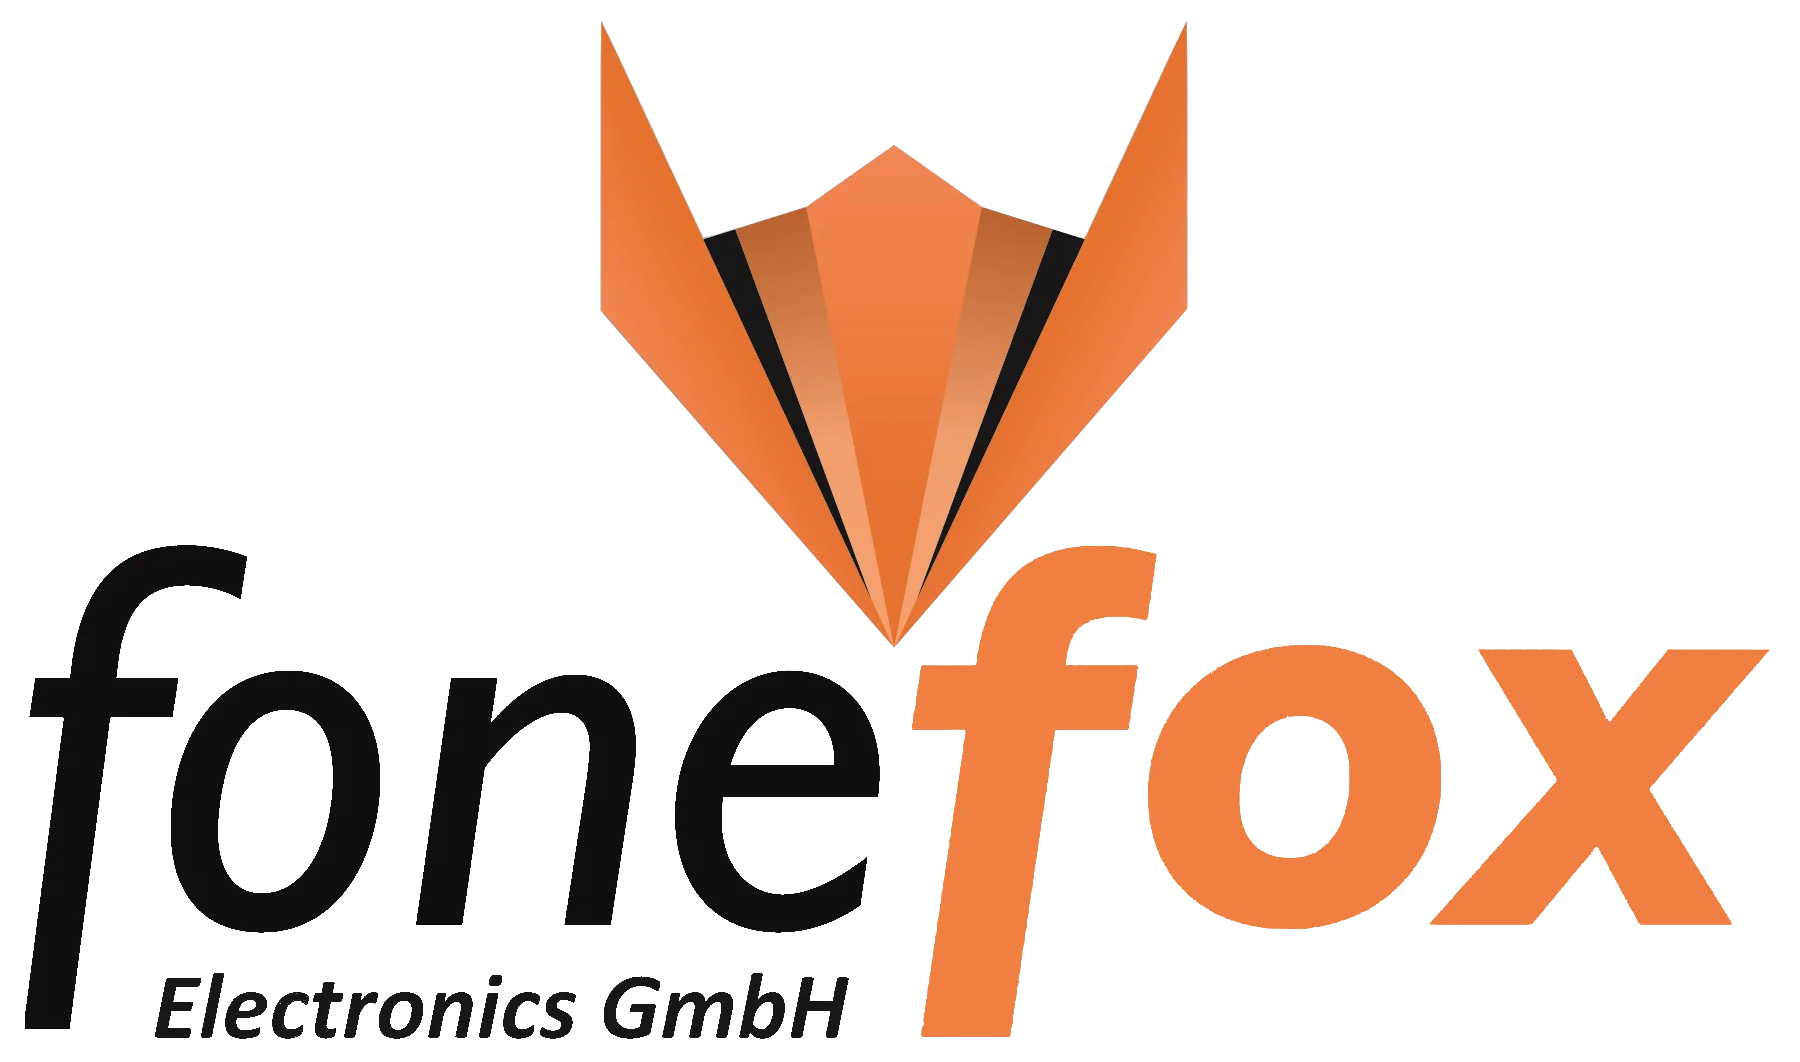 FoneFox